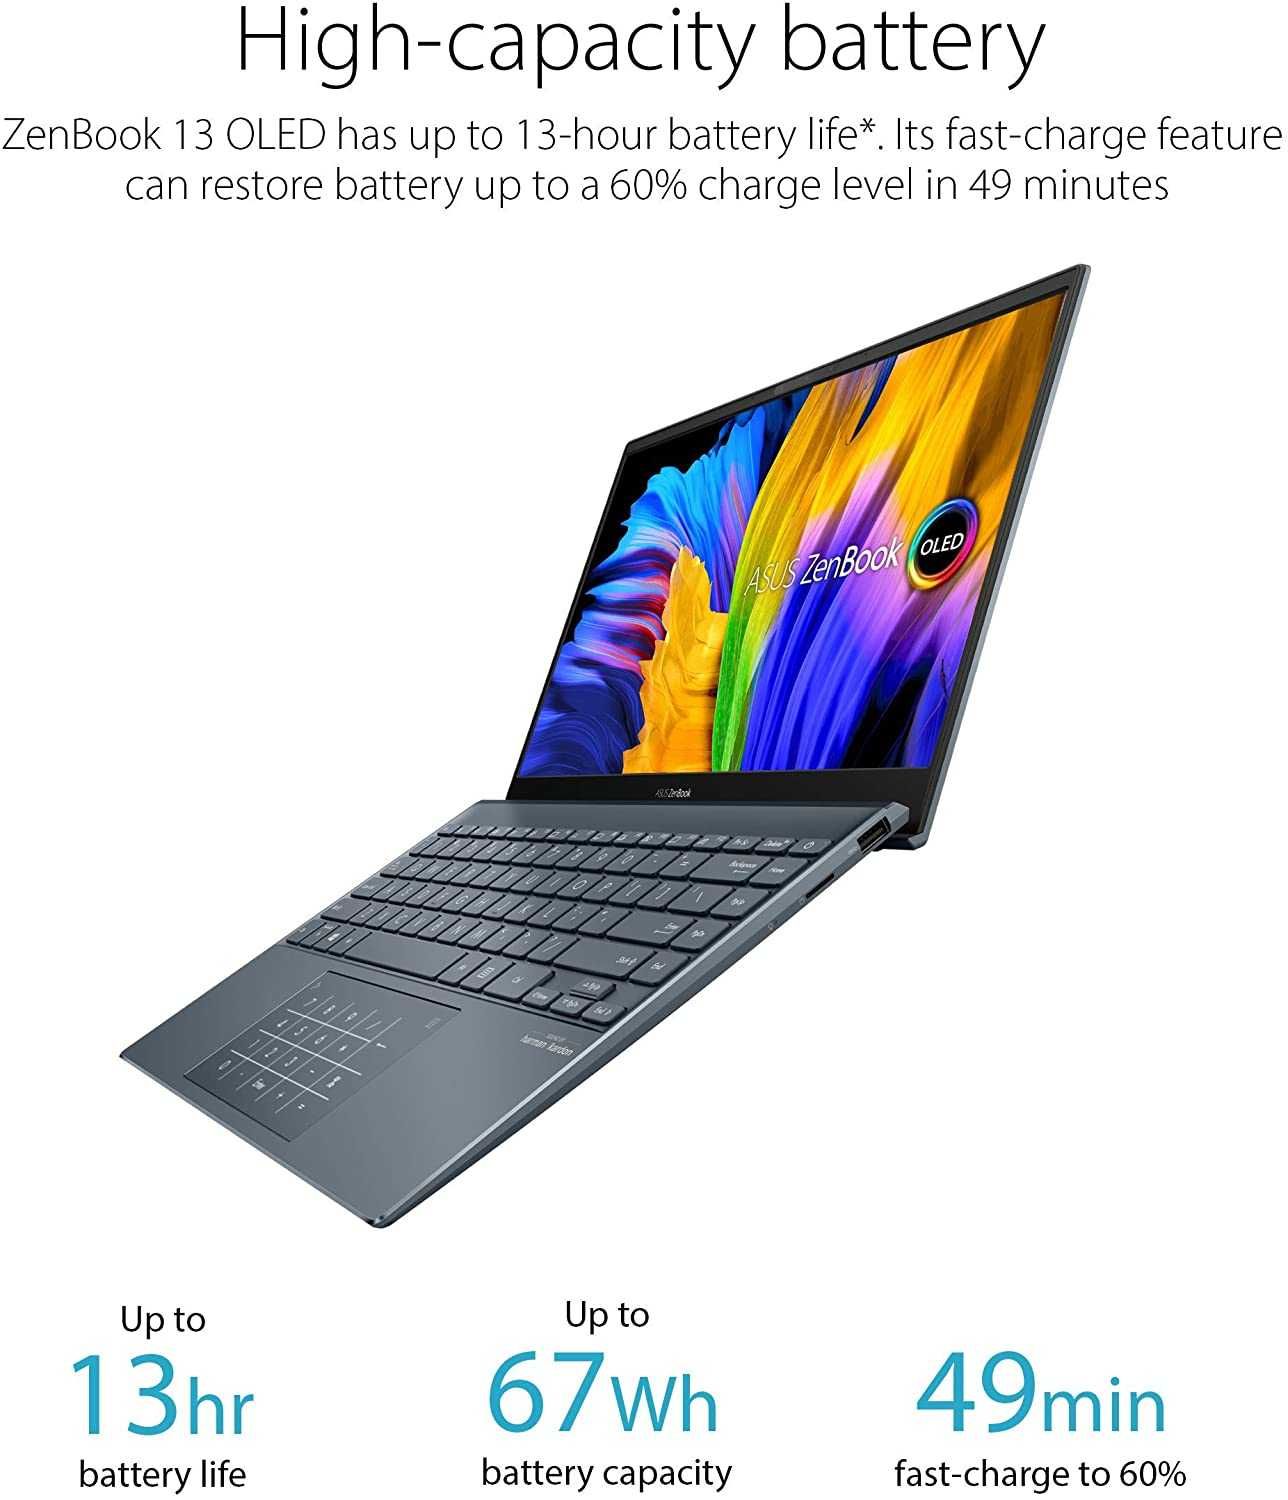 Laptop ASUS Zenbook 13 OLED, i7- pana la 4.7GHz, 13.3", 8GB, SSD 512GB